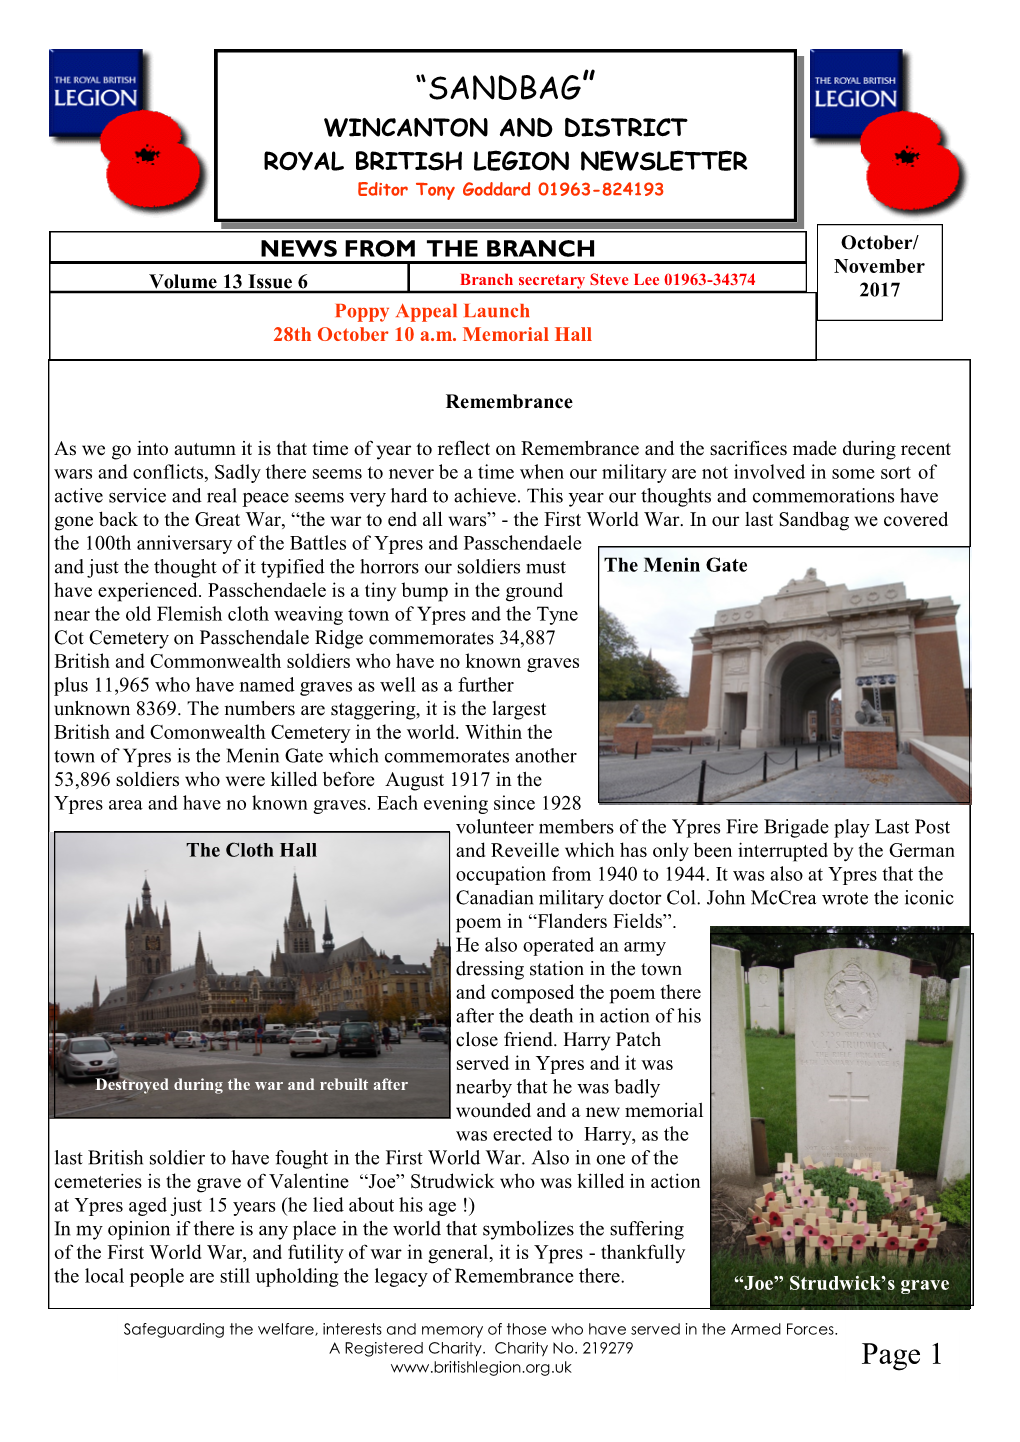 SANDBAG” WINCANTON and DISTRICT ROYAL BRITISH LEGION NEWSLETTER Editor Tony Goddard 01963-824193